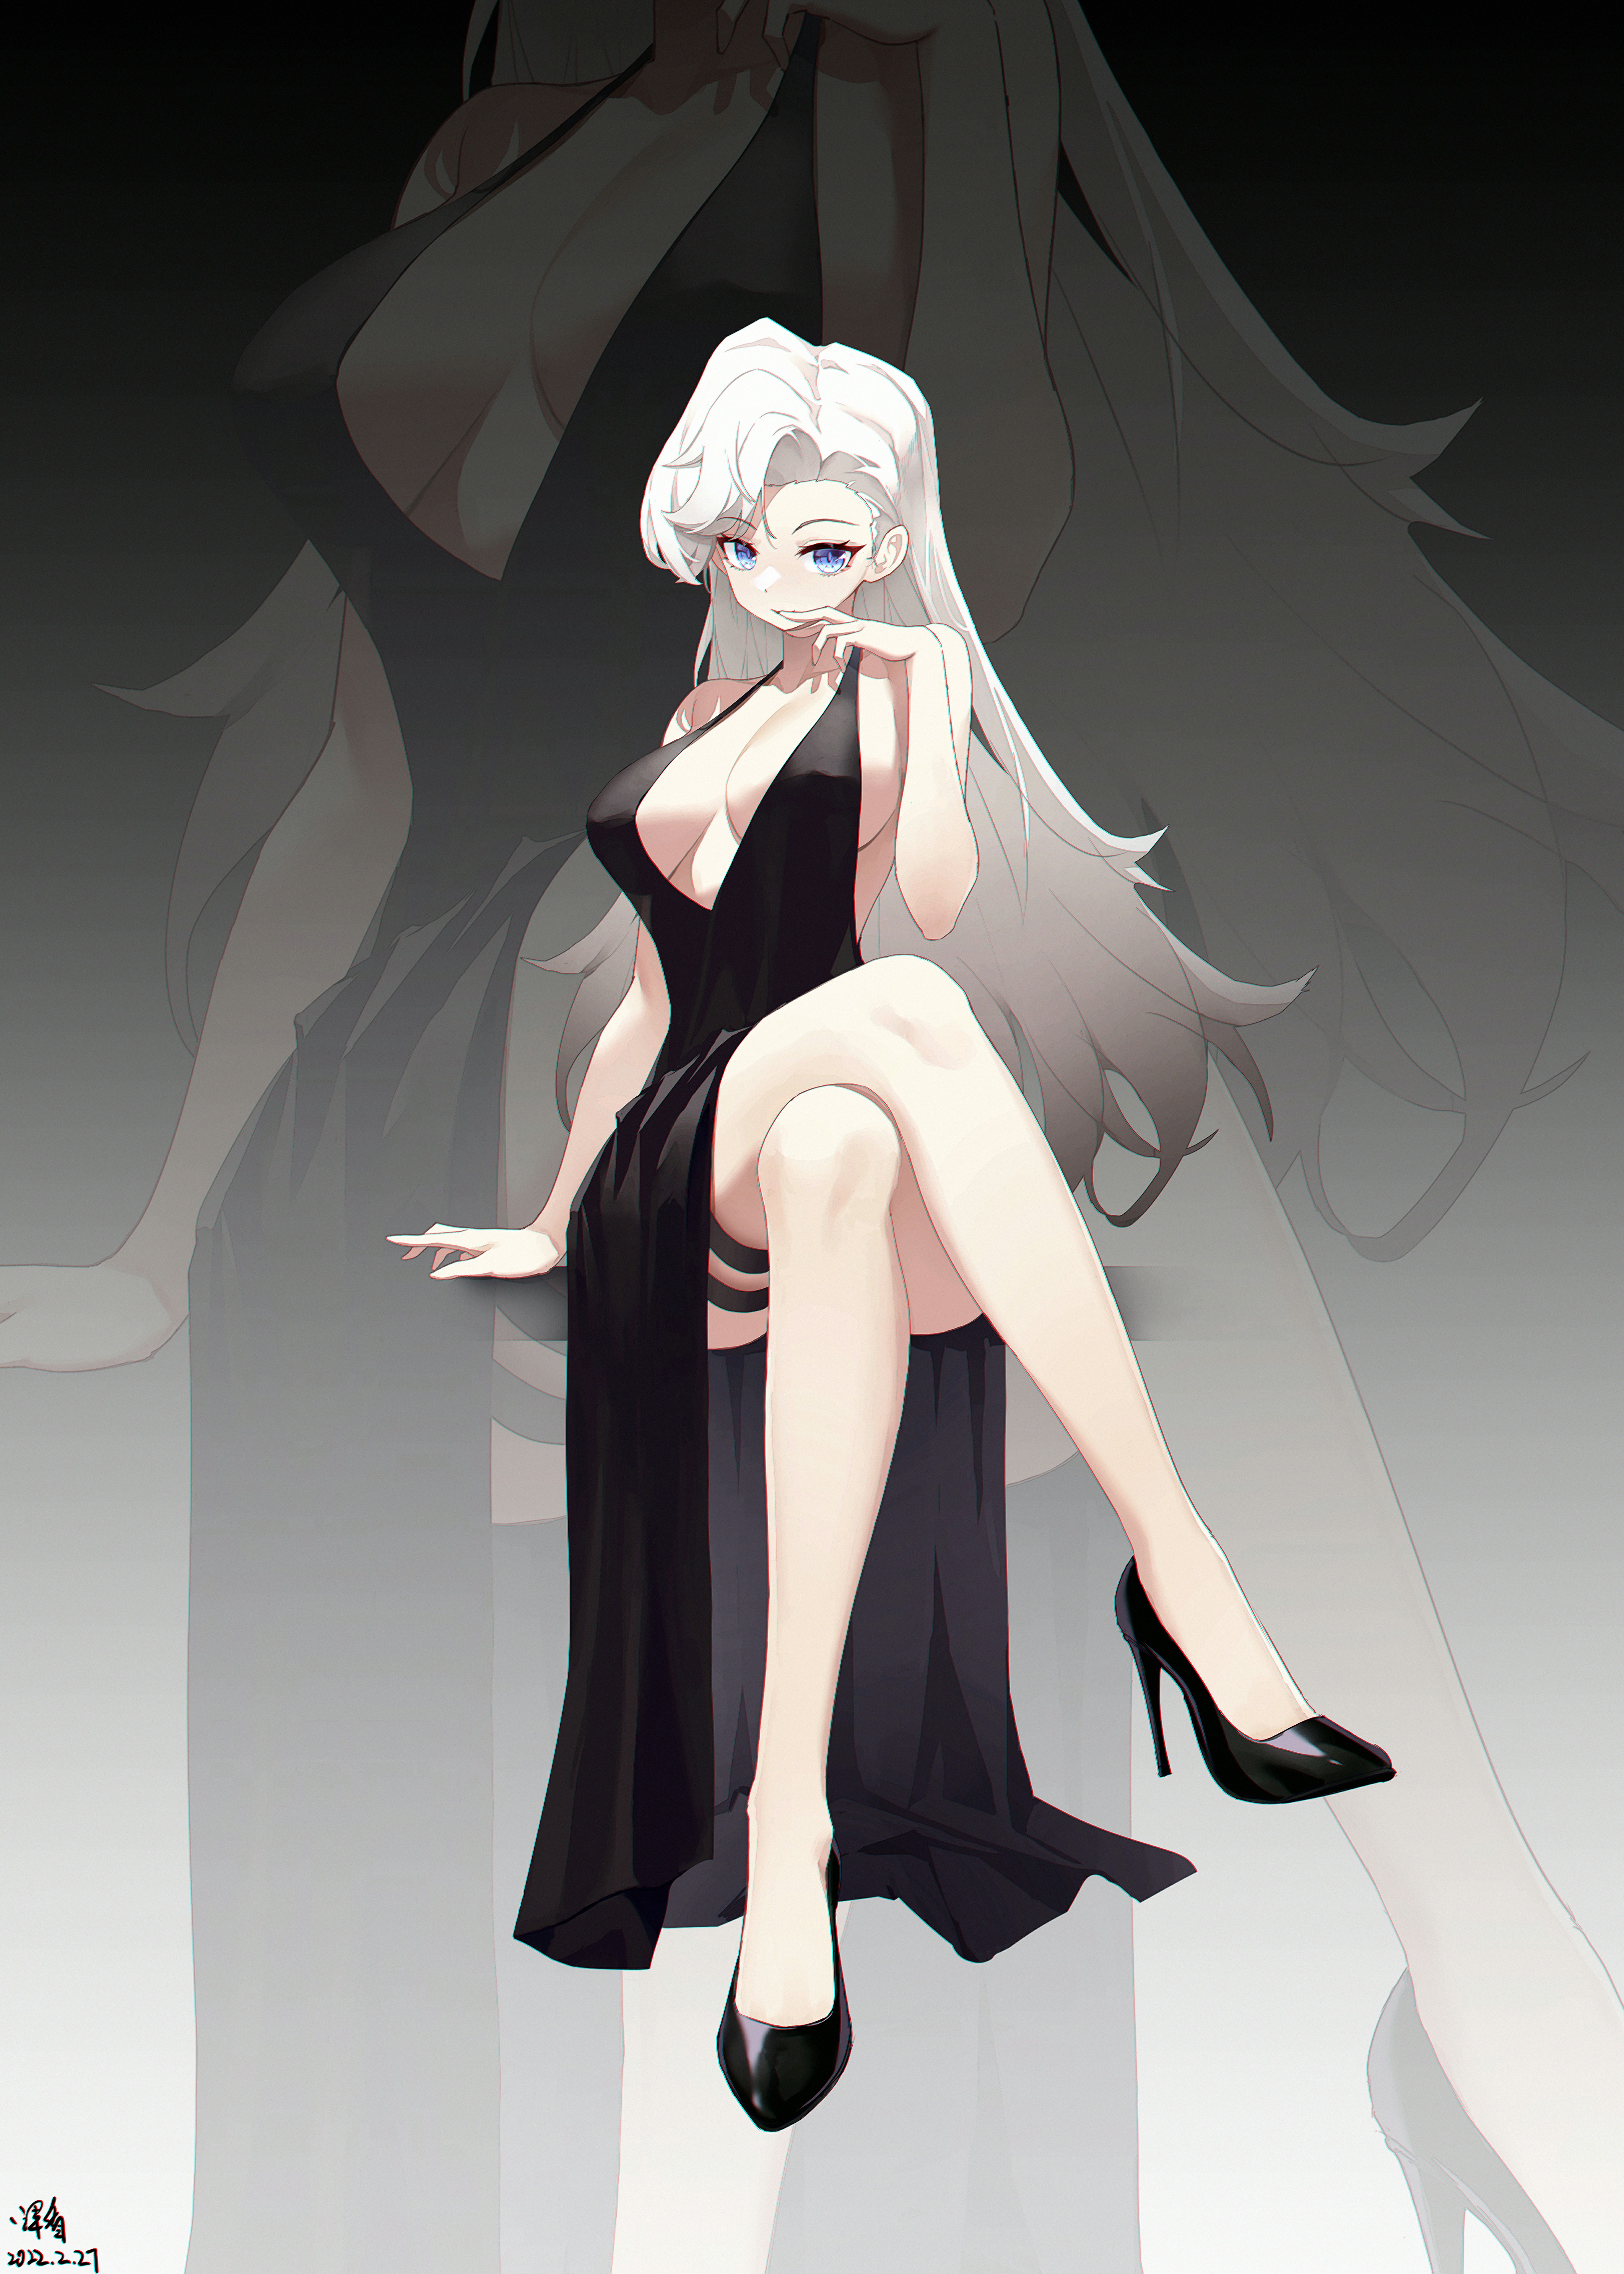 Anime 5000x7000 anime anime girls digital art artwork 2D portrait portrait display petite looking at viewer black dress white hair high heels legs crossed big boobs dress